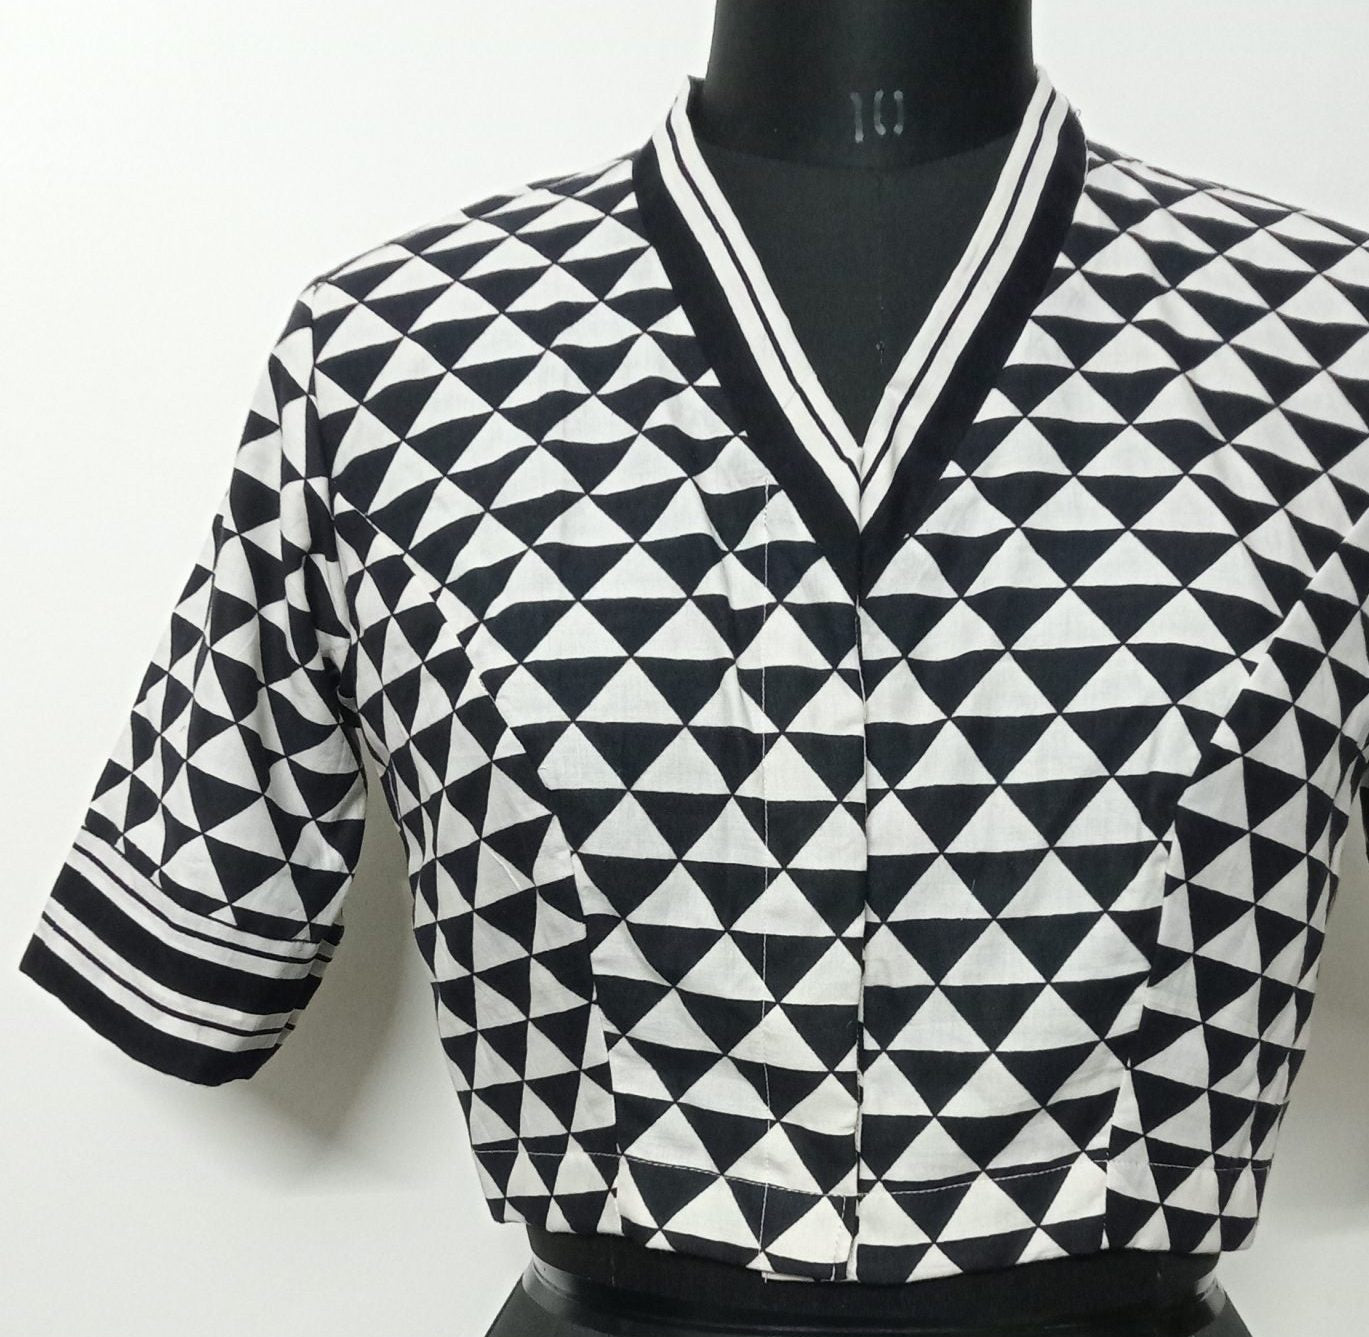 Monochrome triangular geometric print black and white blouse